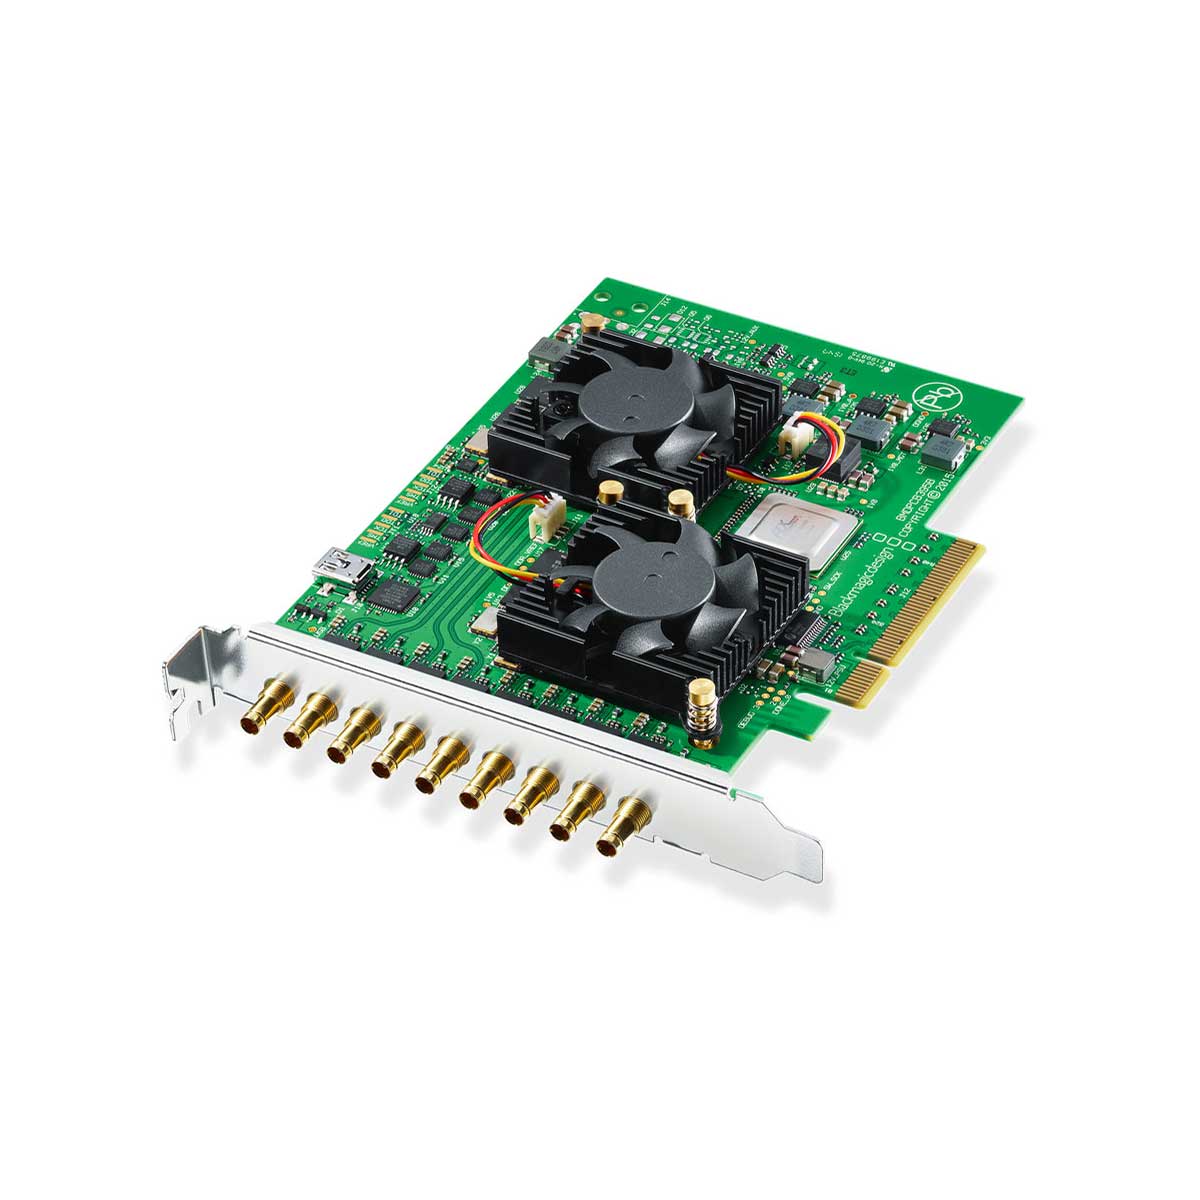 Blackmagic DeckLink Quad 2 3G-SDI -4 channel PCI Express Video capture and playback card.